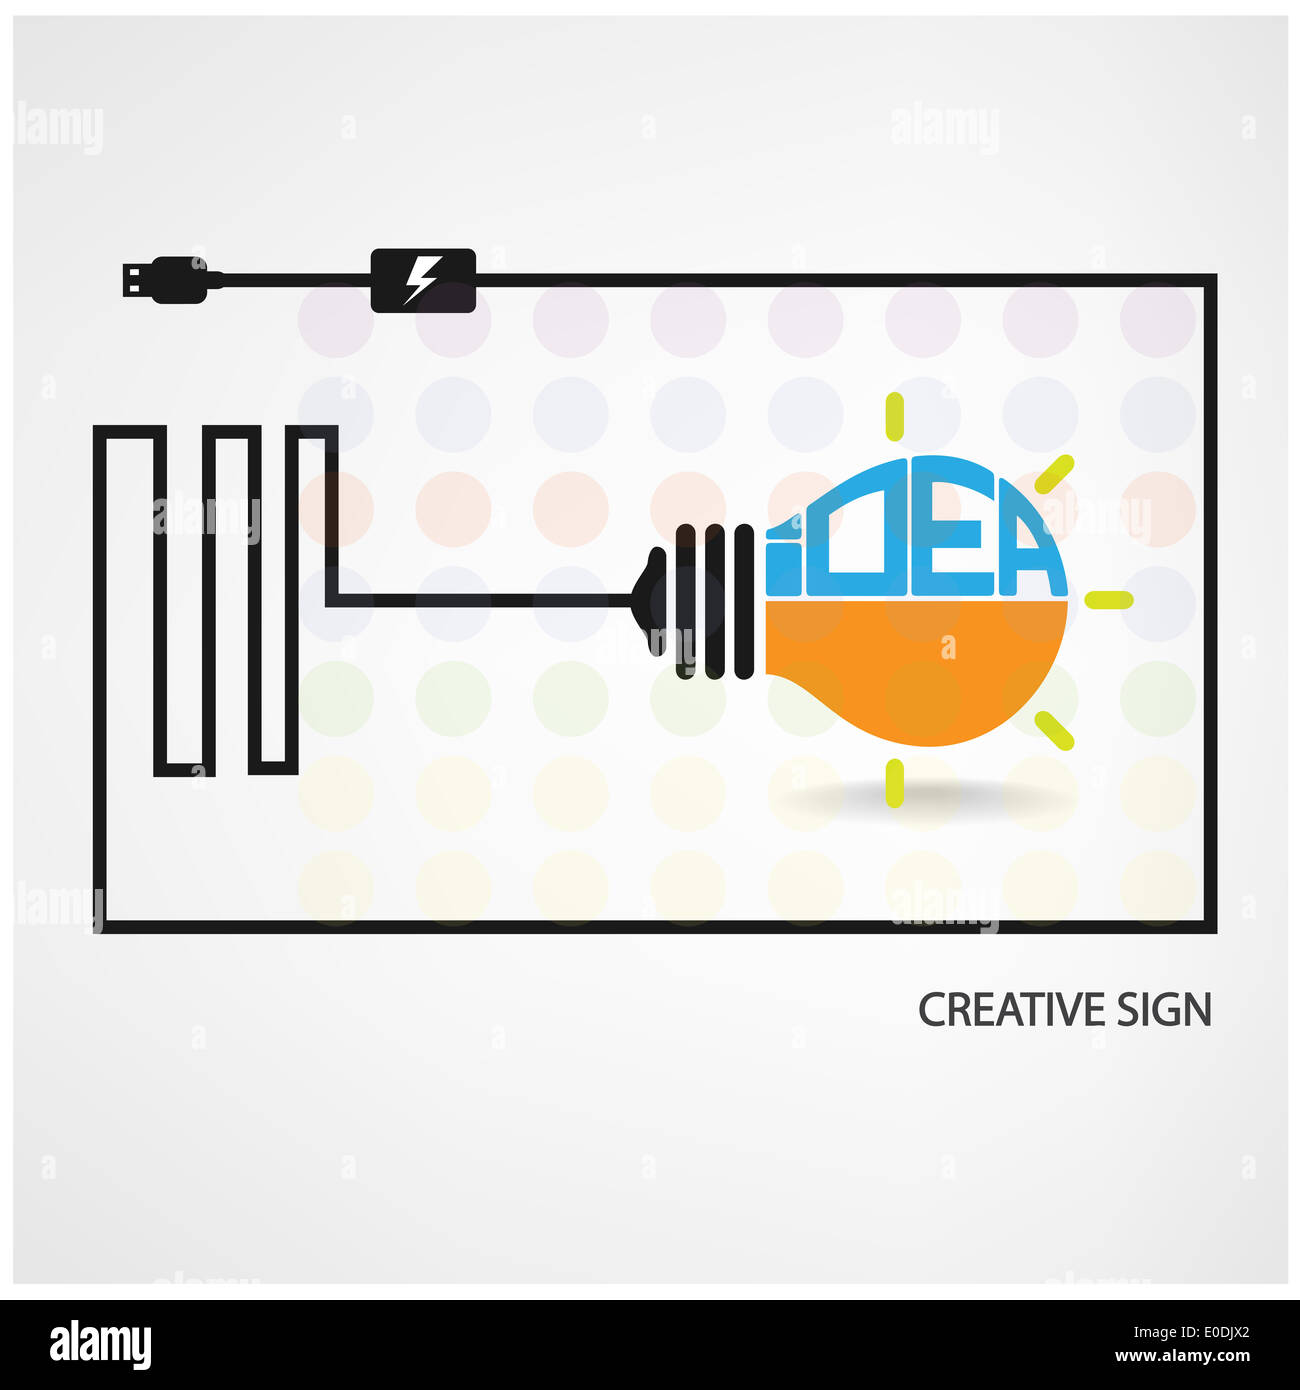 creative light bulb symbol ,saving sign,ideas concepts,business background. Stock Photo